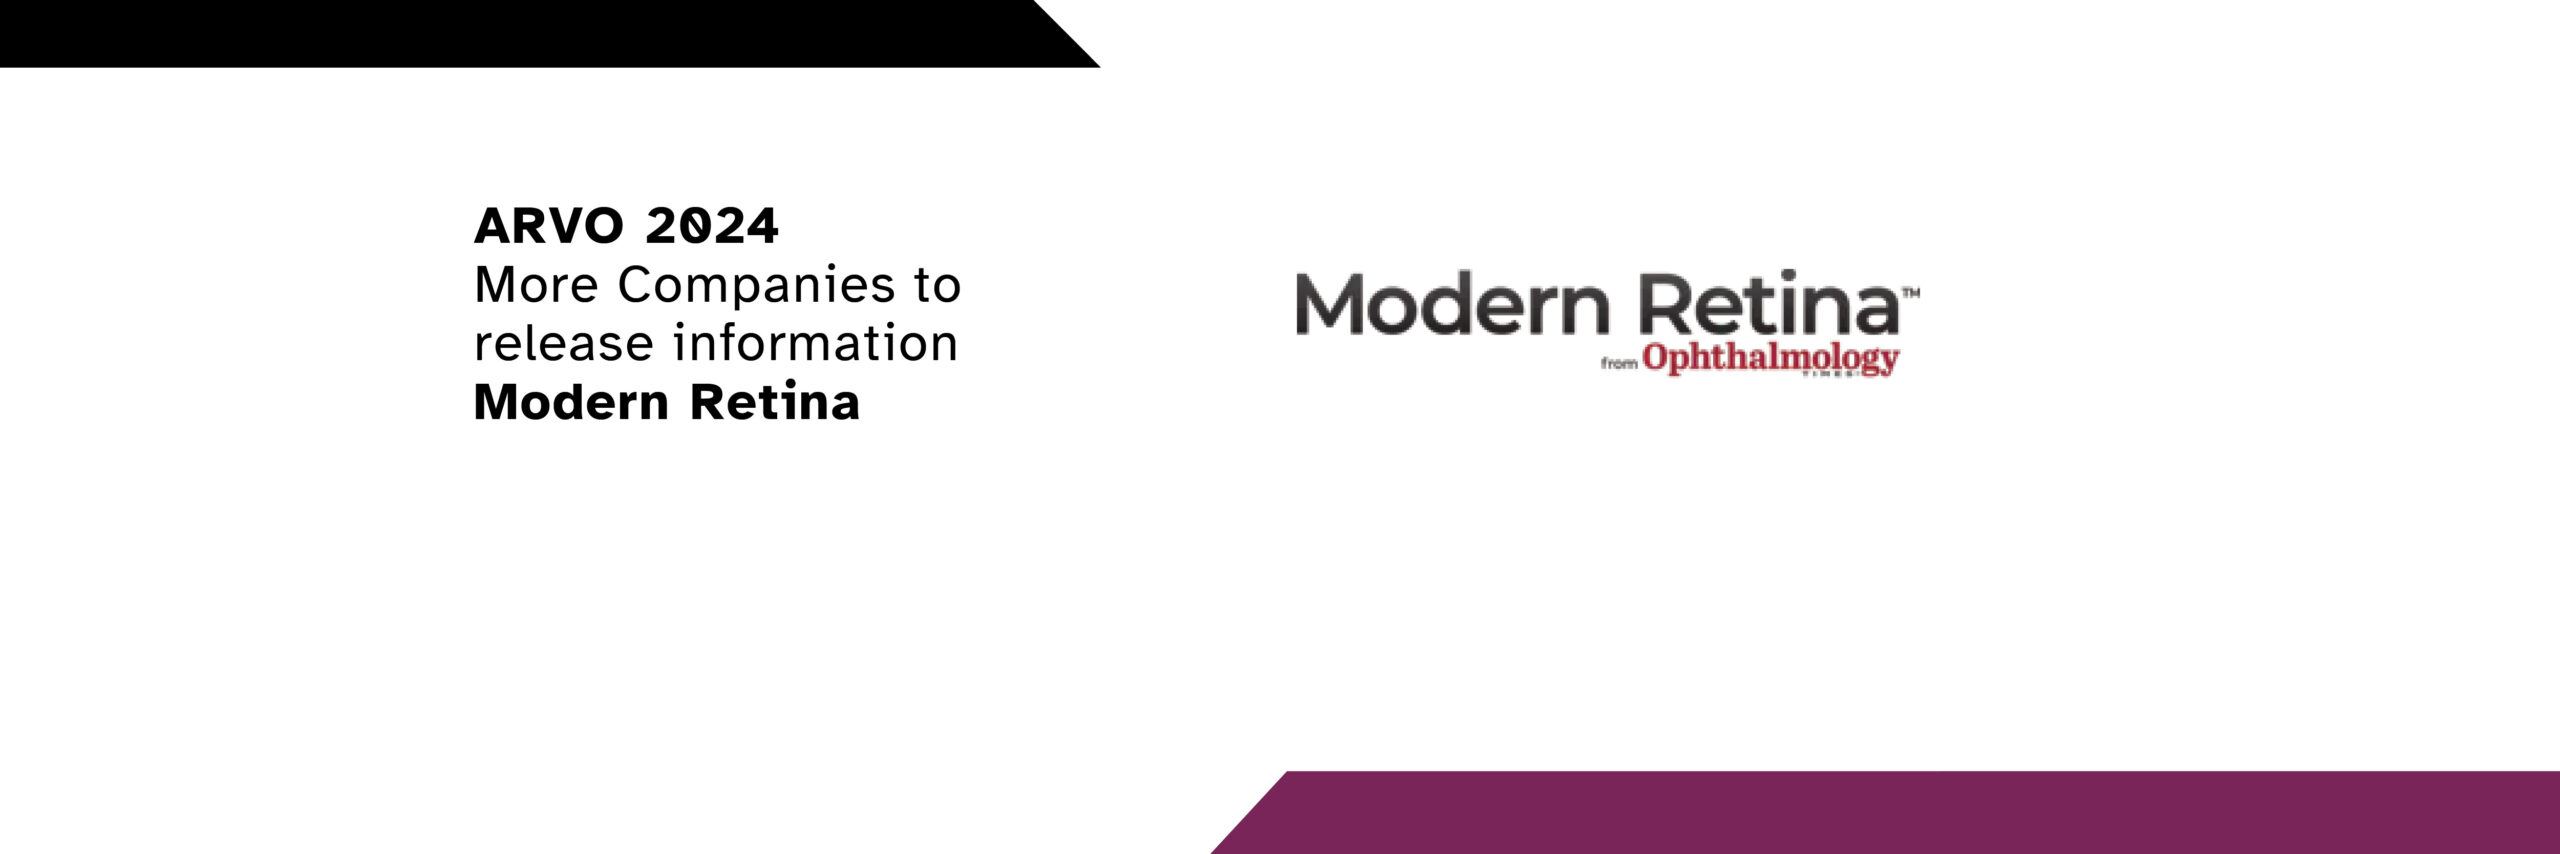 Modern Retina: ARVO 2024 Information on Presentations